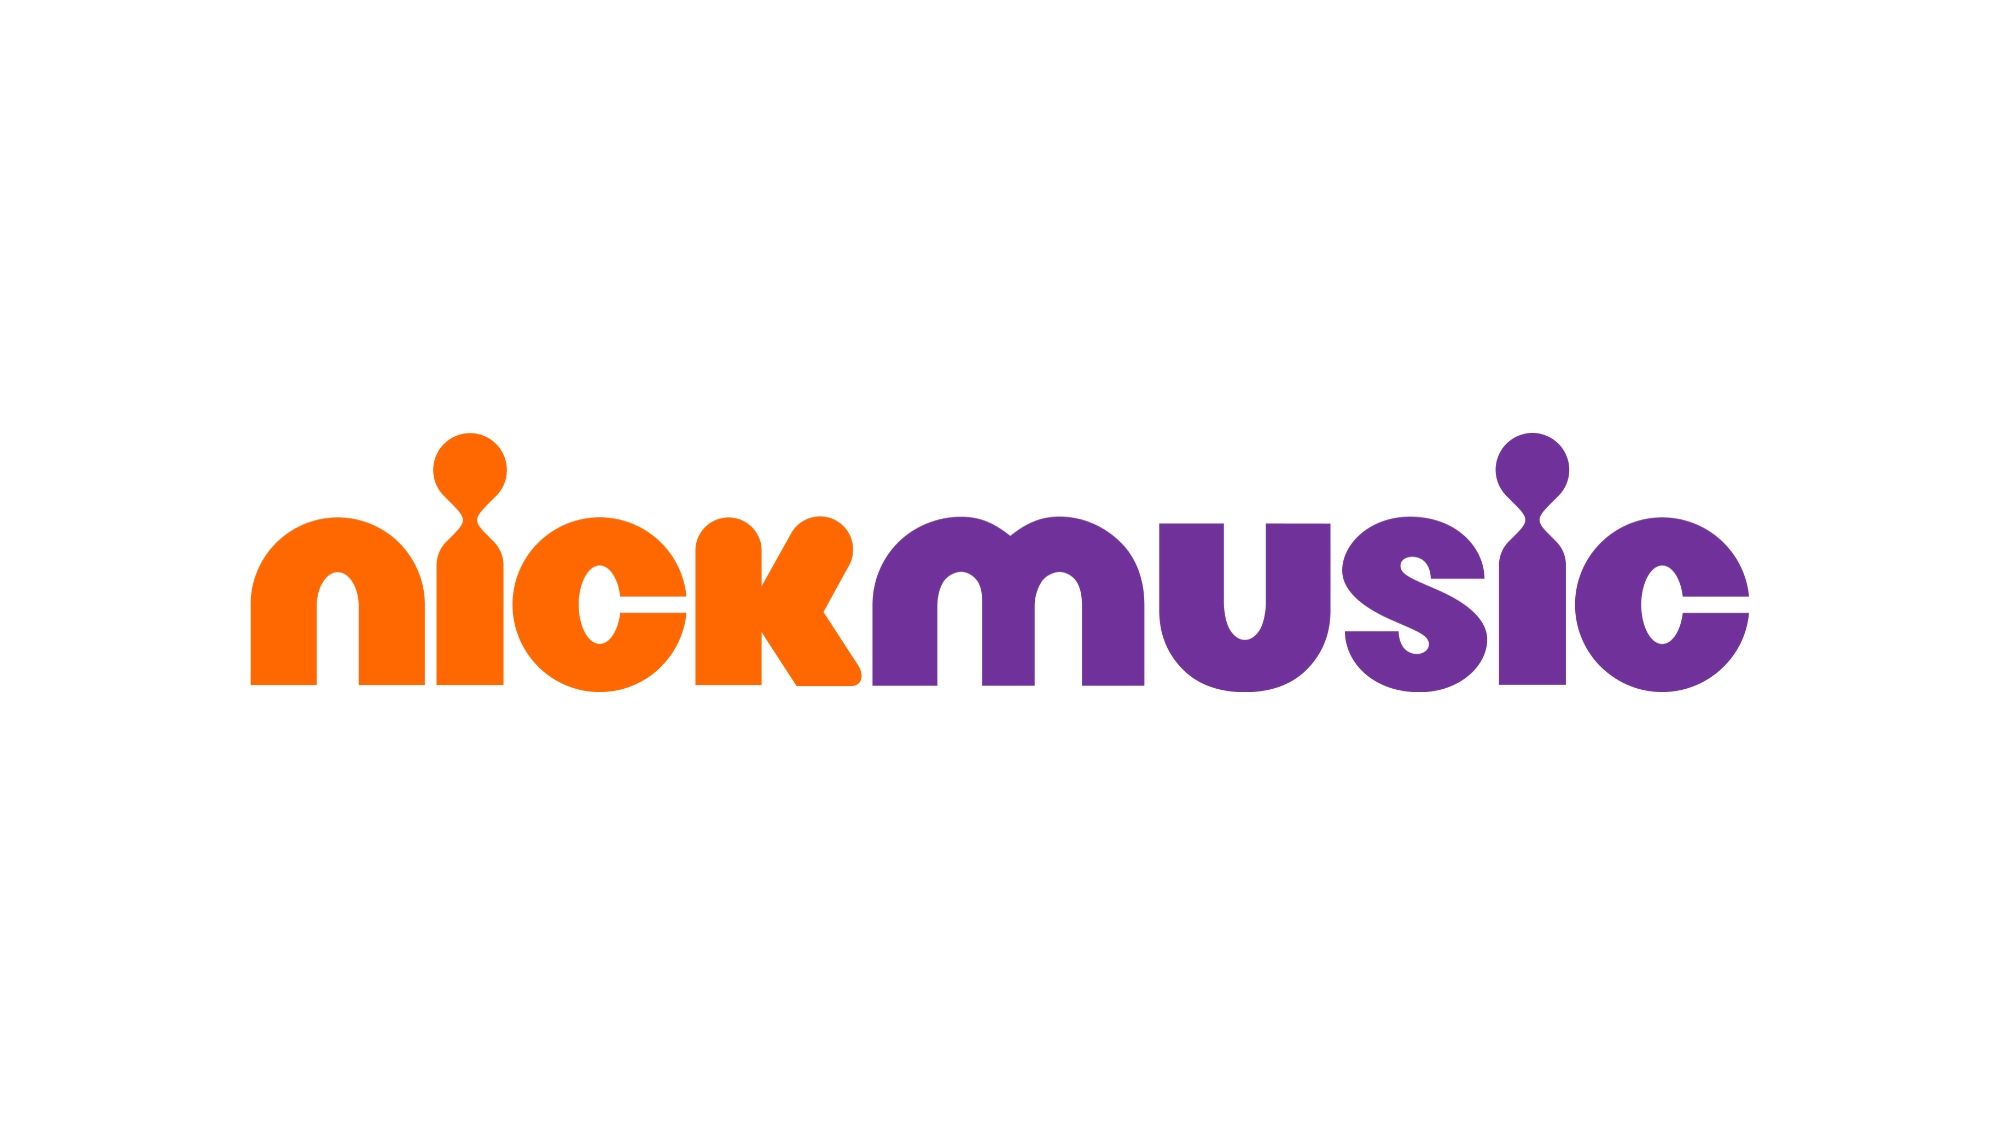 Nick channel. Телеканал Nickelodeon. Nickelodeon логотип. Телеканал Nick. Никелодеон. Nick.